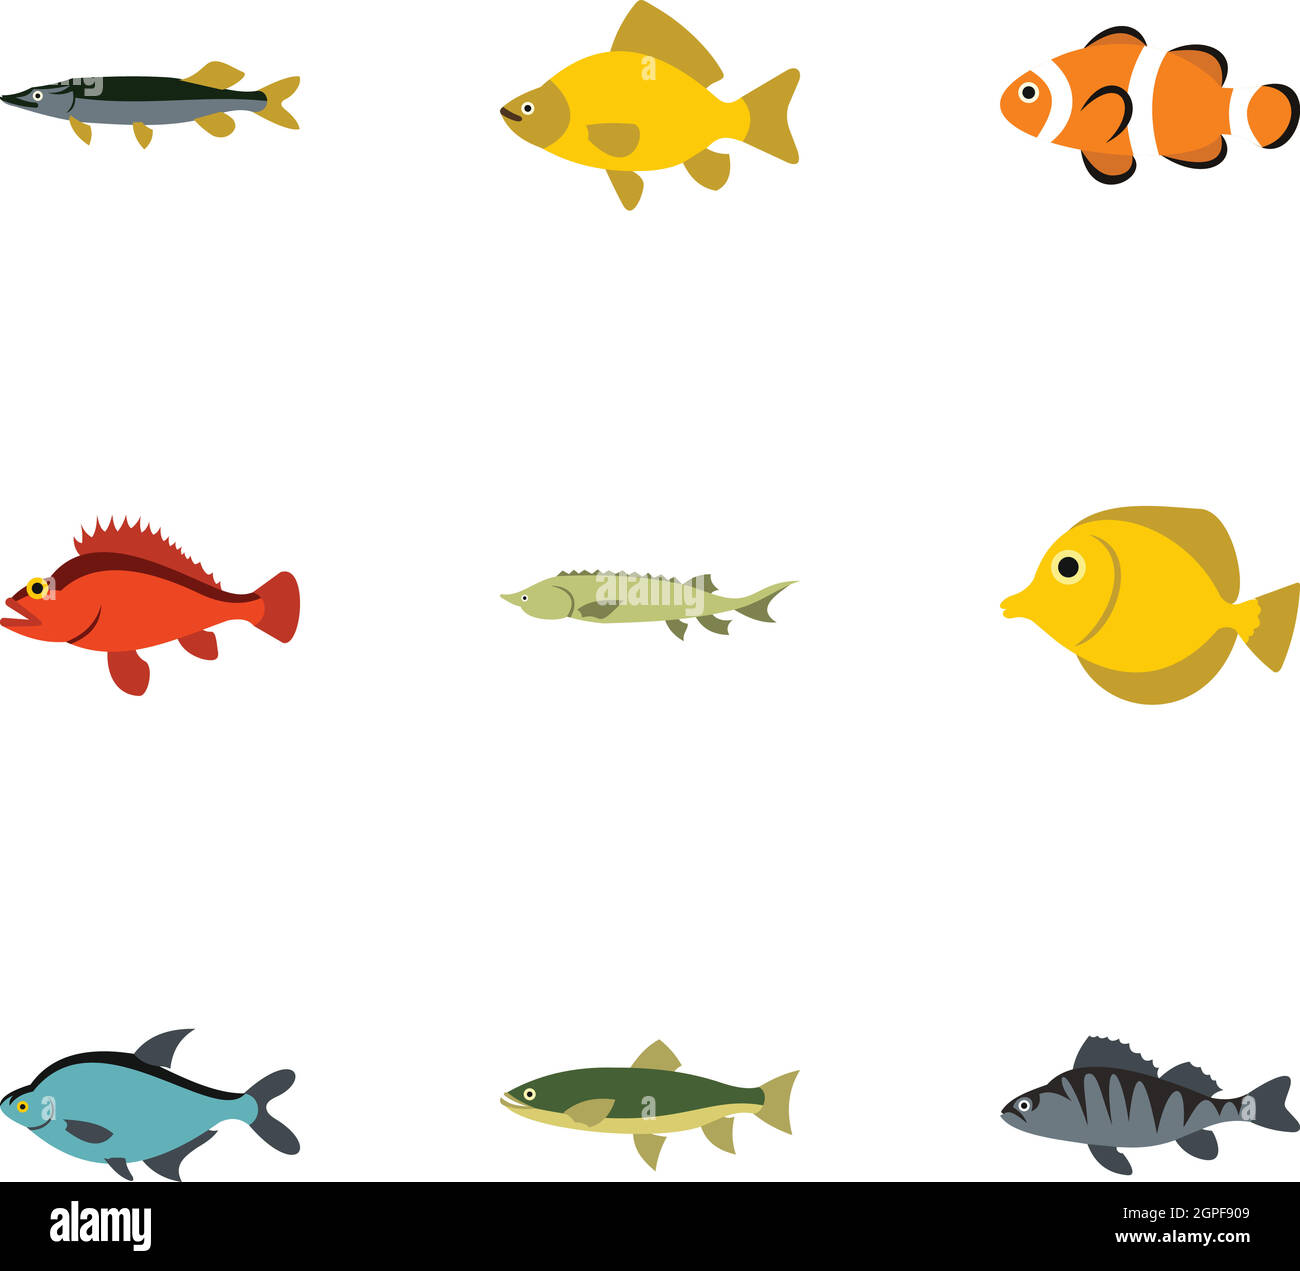 River fish icons set, flat style Stock Vector Image & Art - Alamy